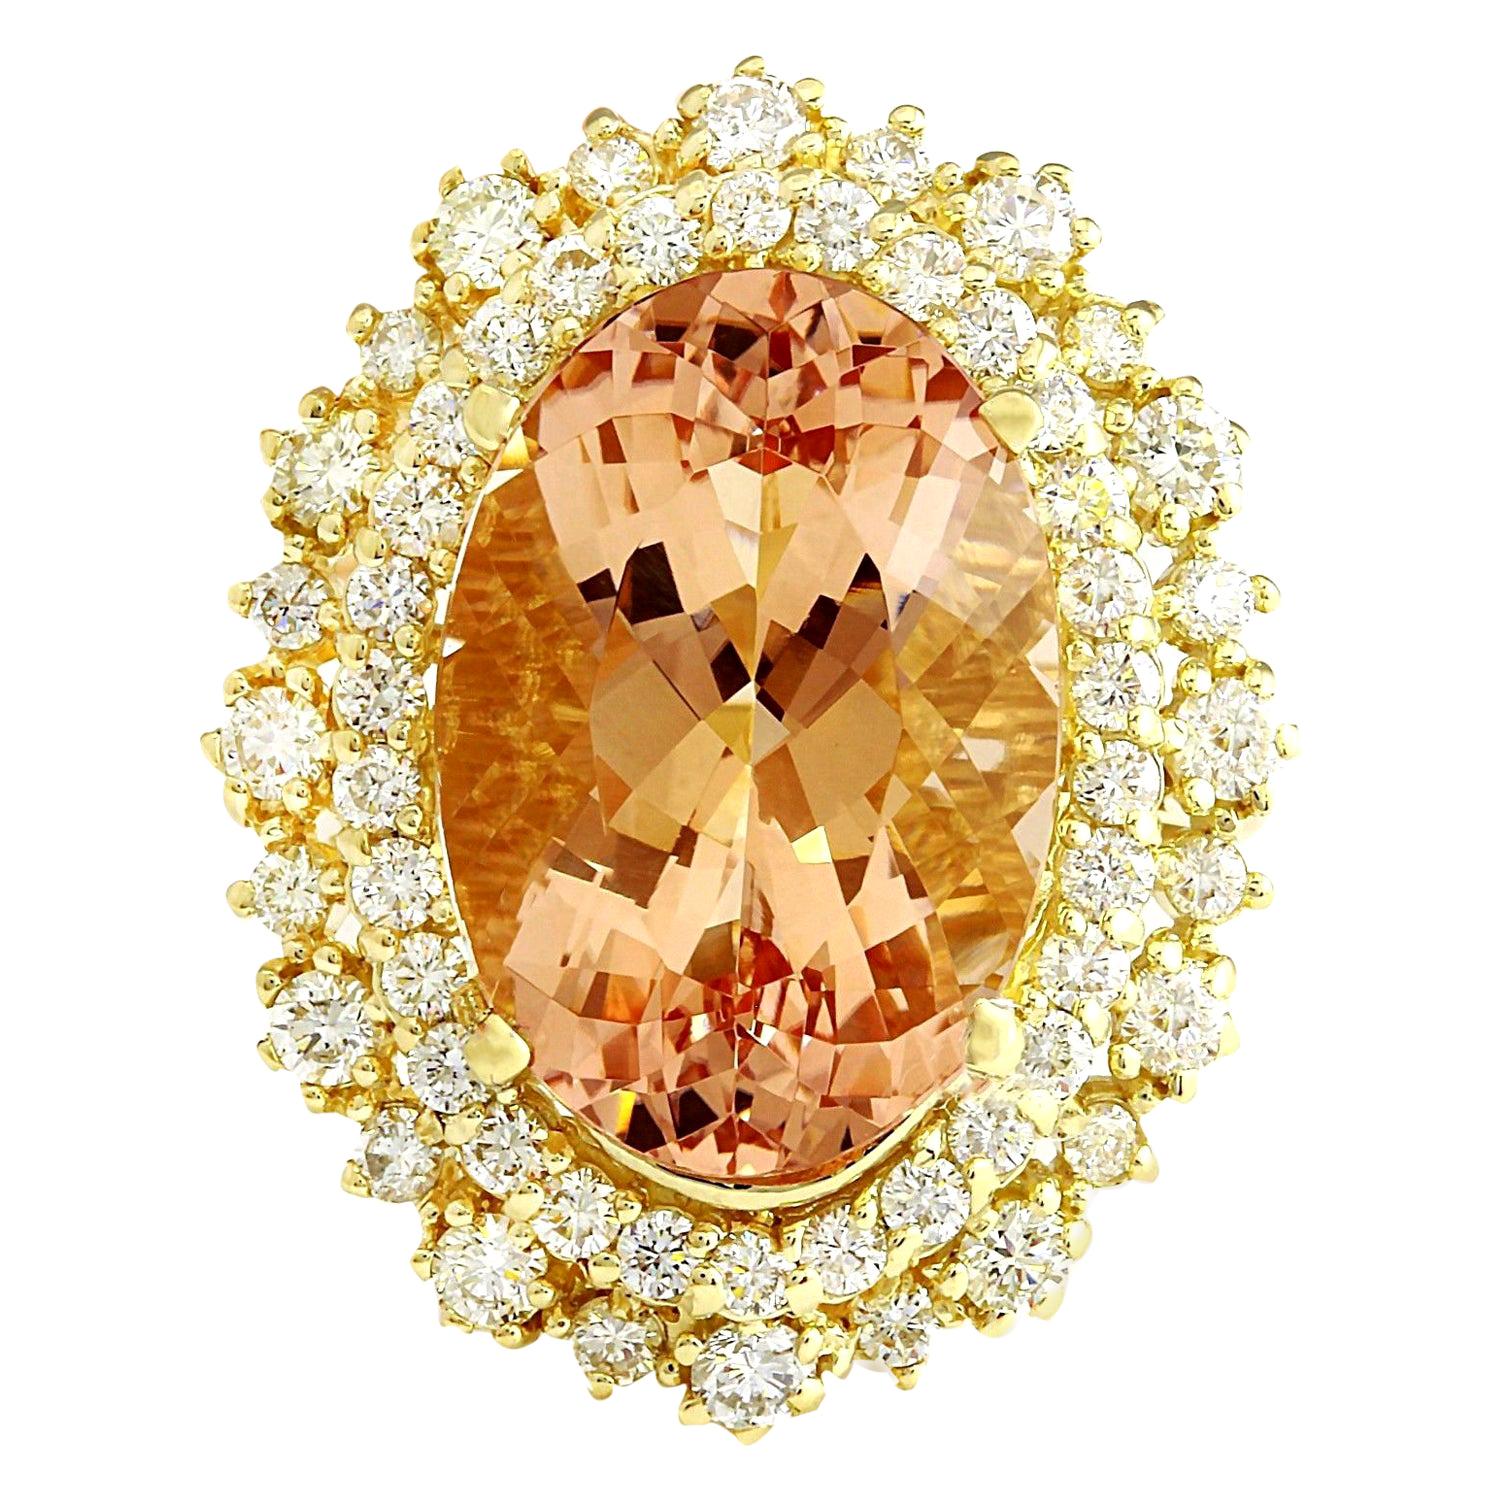 Exquisite Natural Morganite Diamond Ring In 14 Karat Solid Yellow Gold 